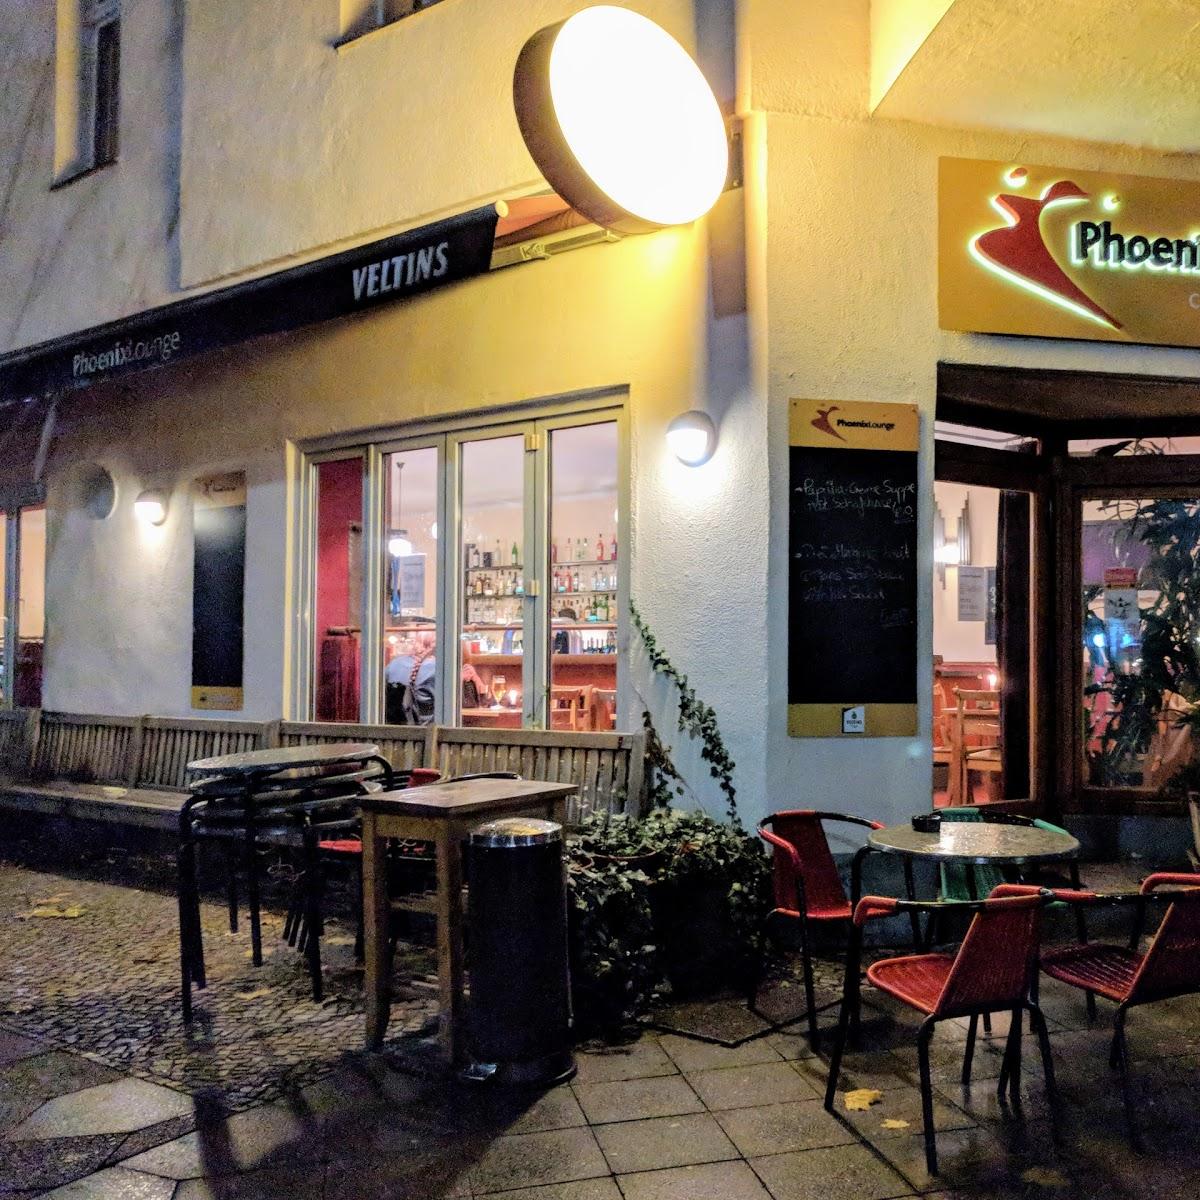 Restaurant "Phoenix Lounge" in Berlin